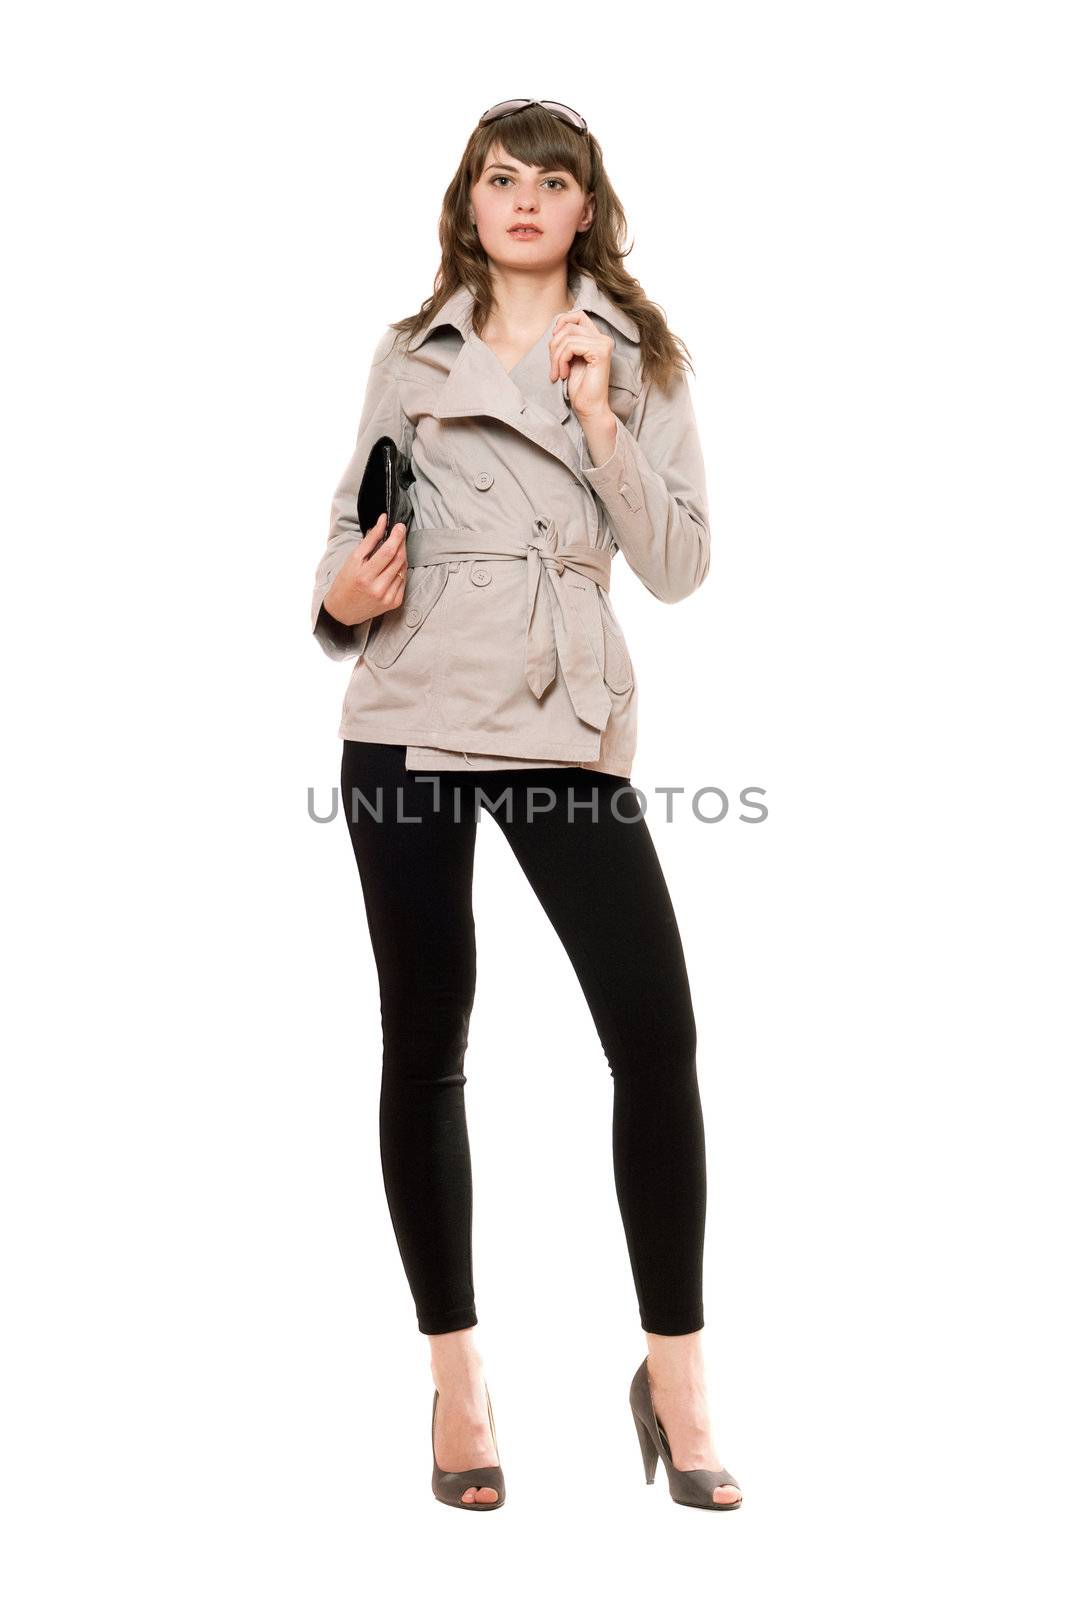 Nice girl wearing a coat and black leggings